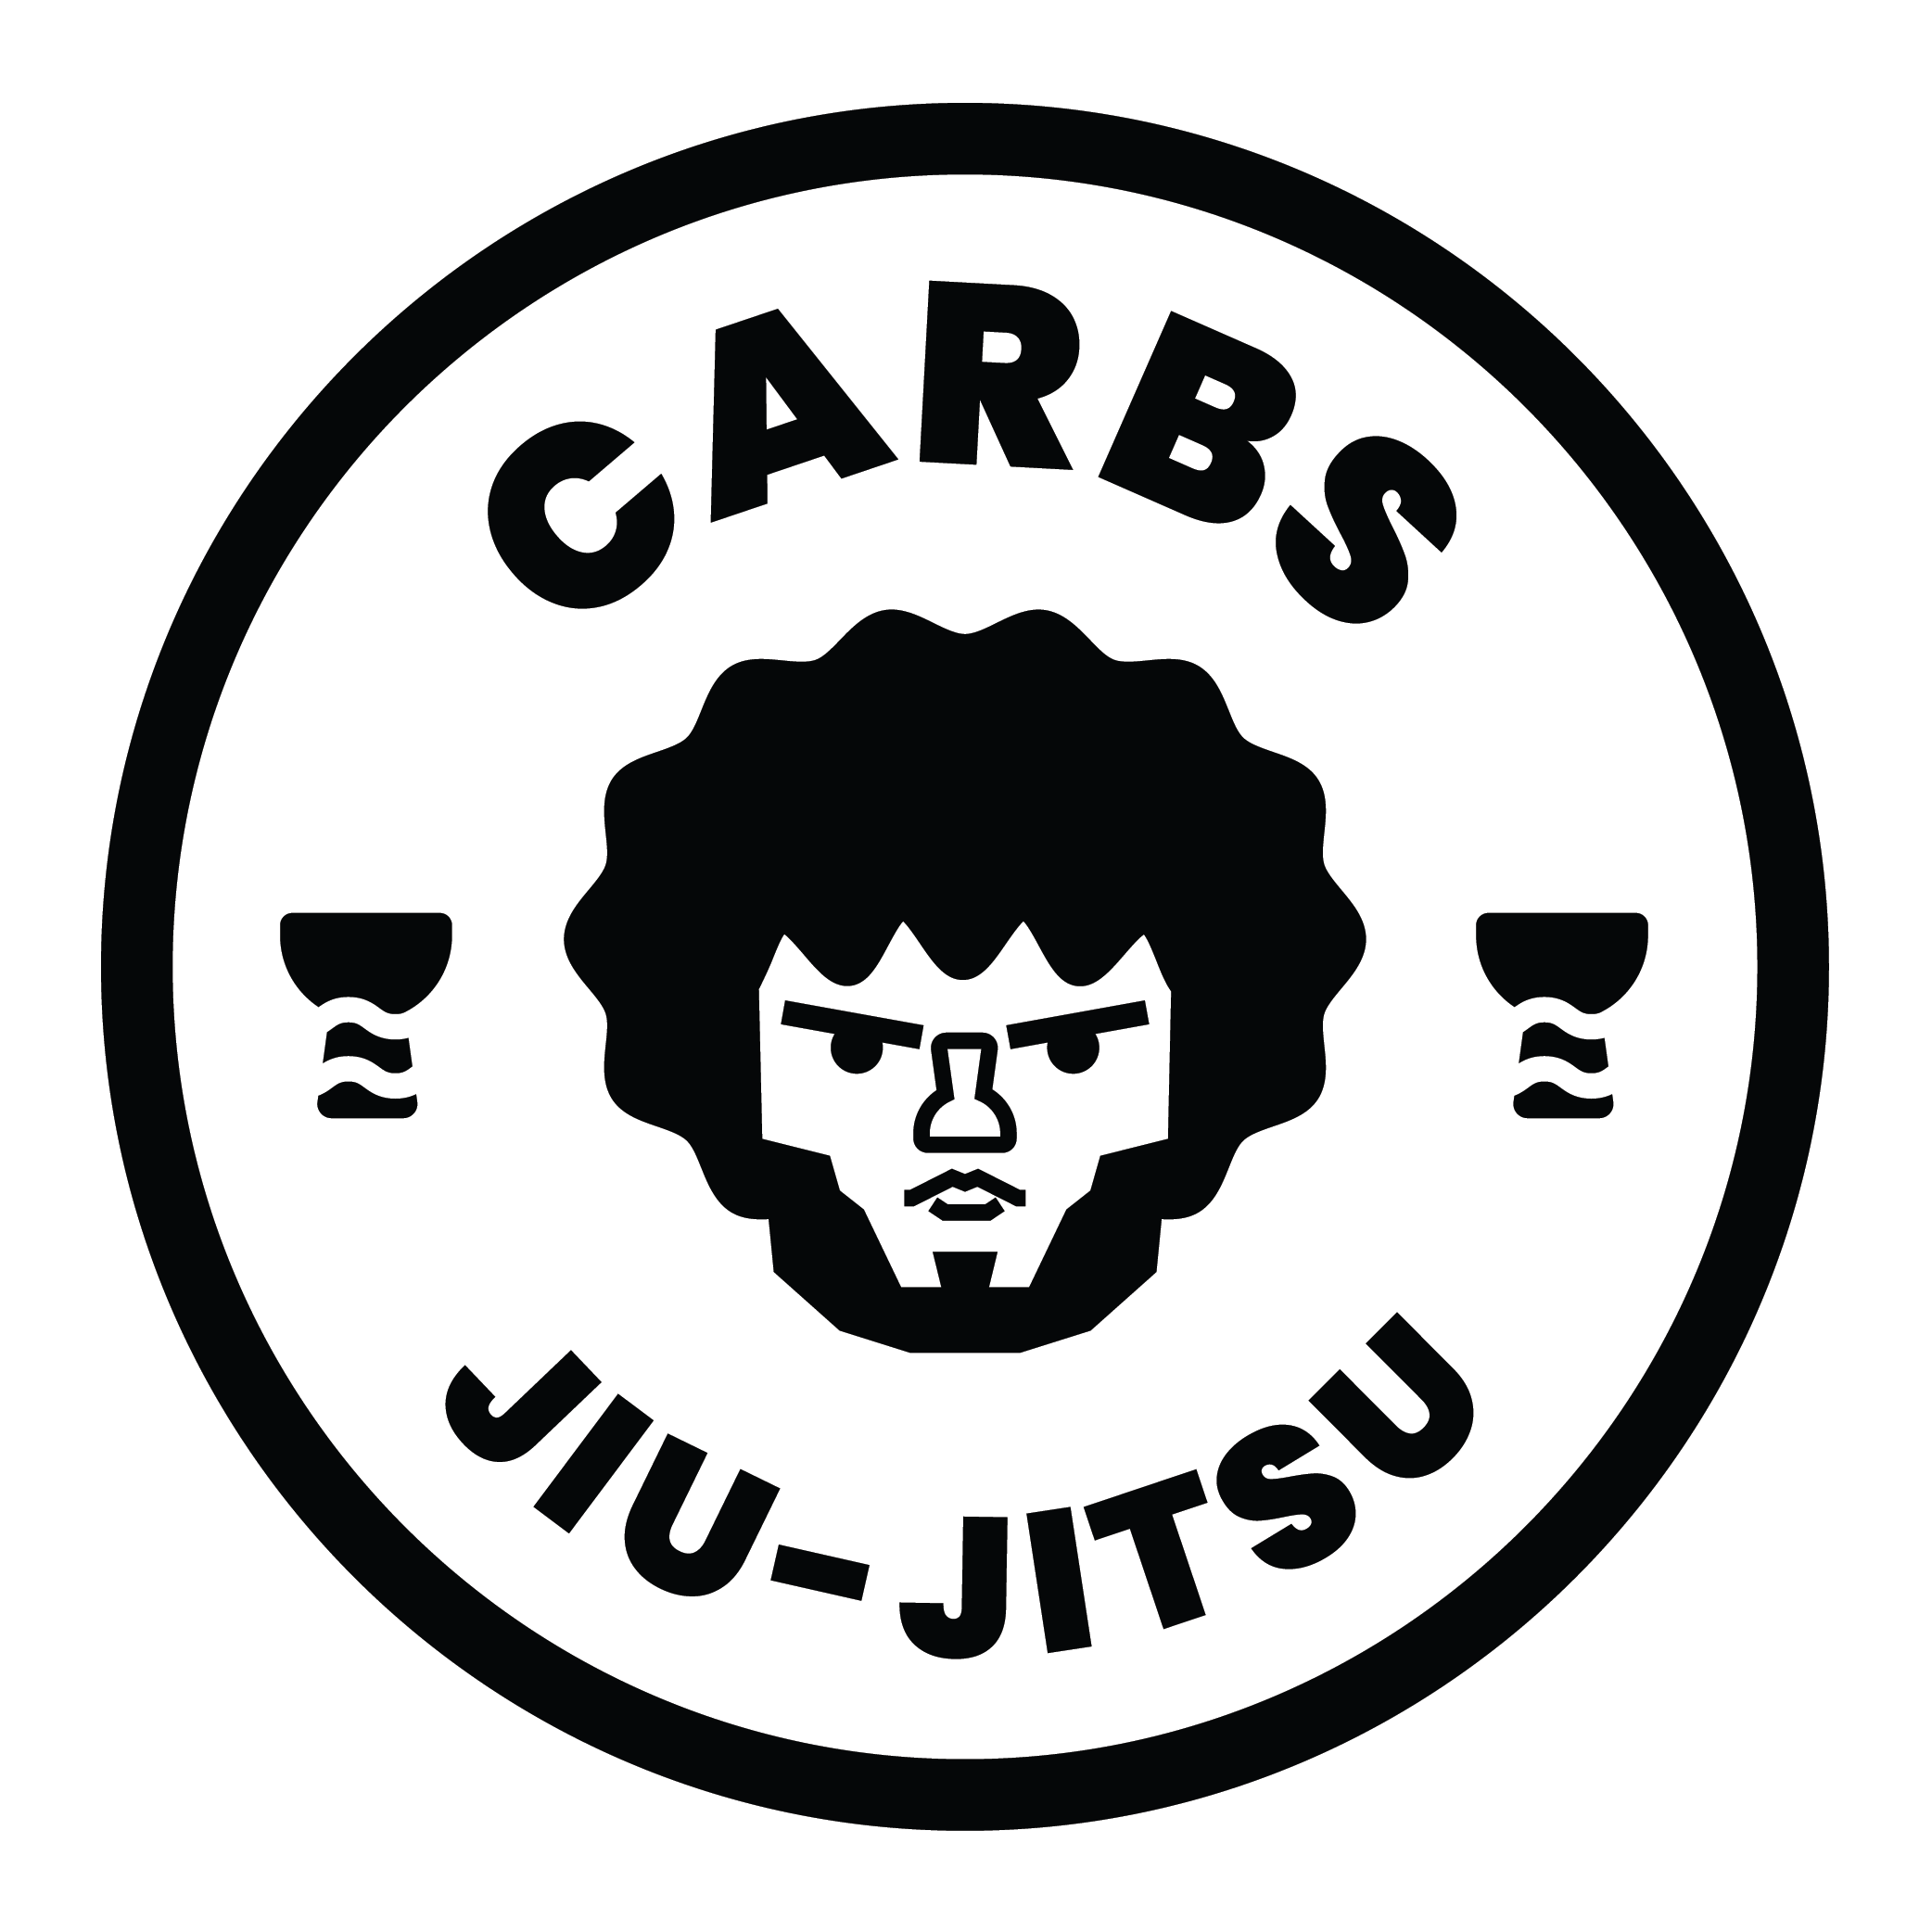 Carbs Jiu-Jitsu